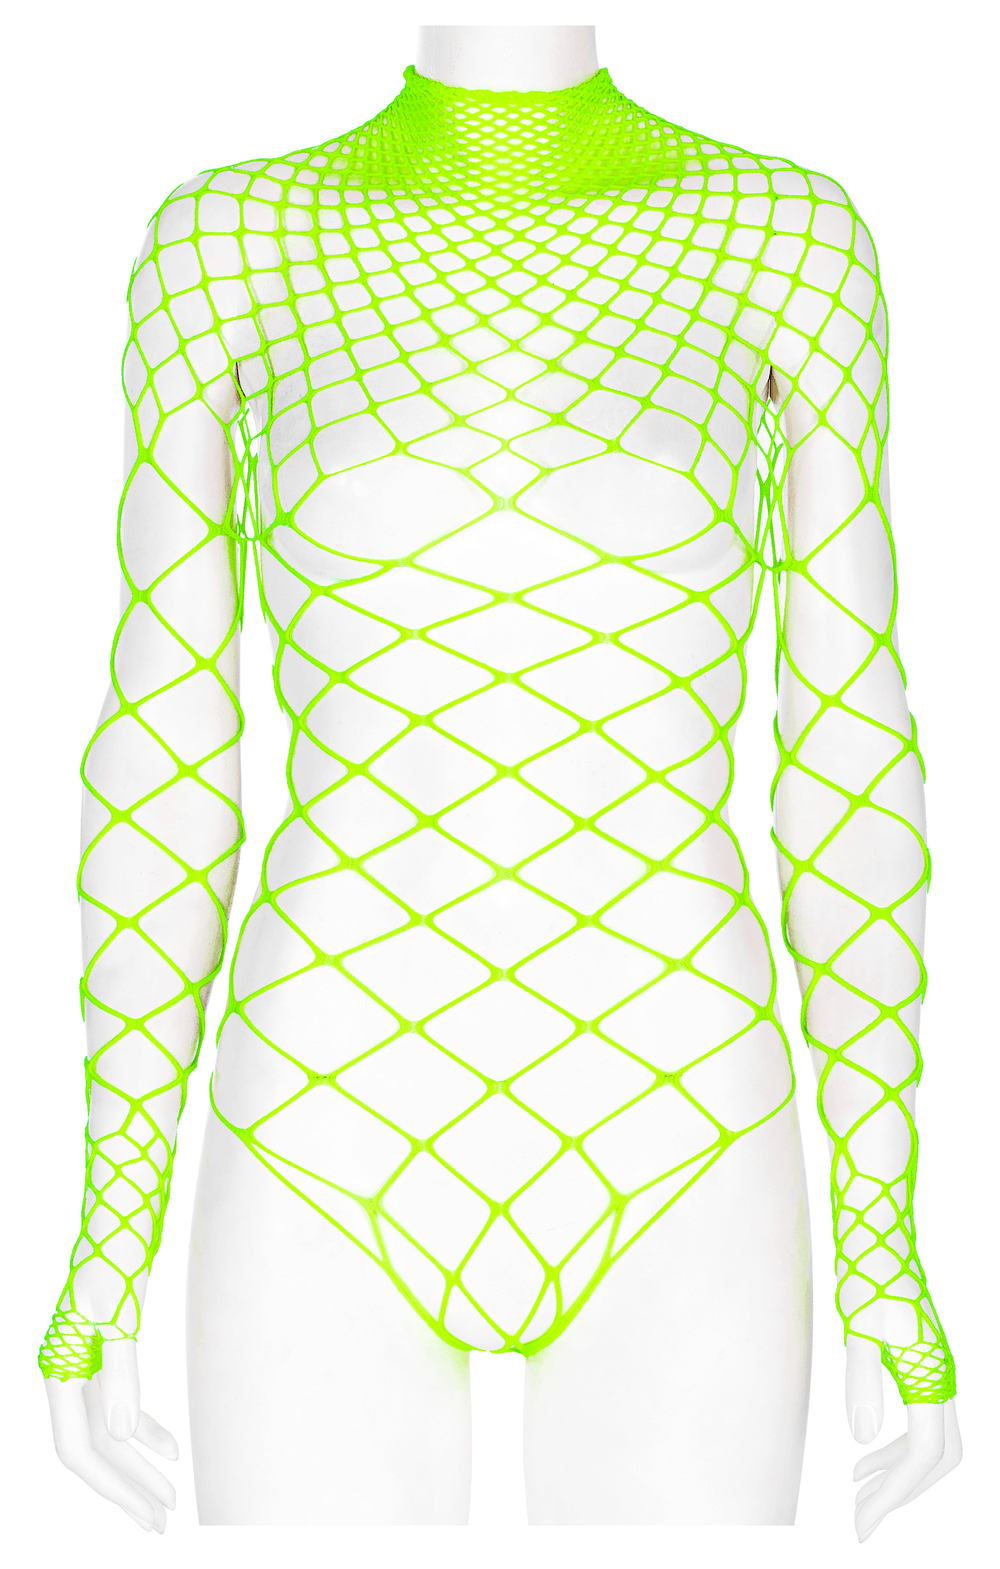 Neon Green Mesh Bodysuit - Edgy Long Sleeve